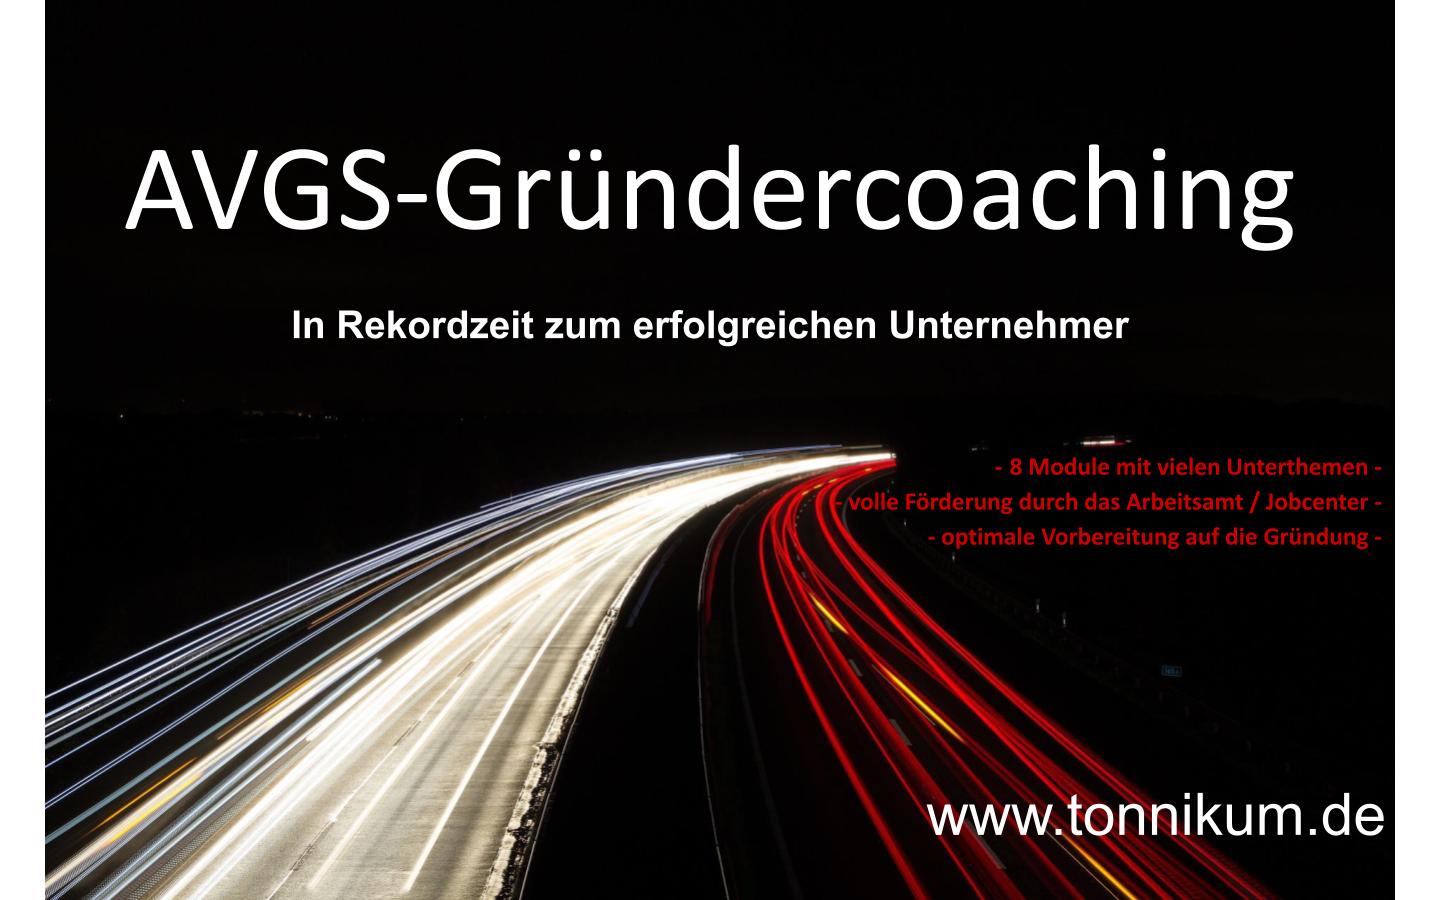 AVGS-Gründercoaching  ⇒ Gütersloh